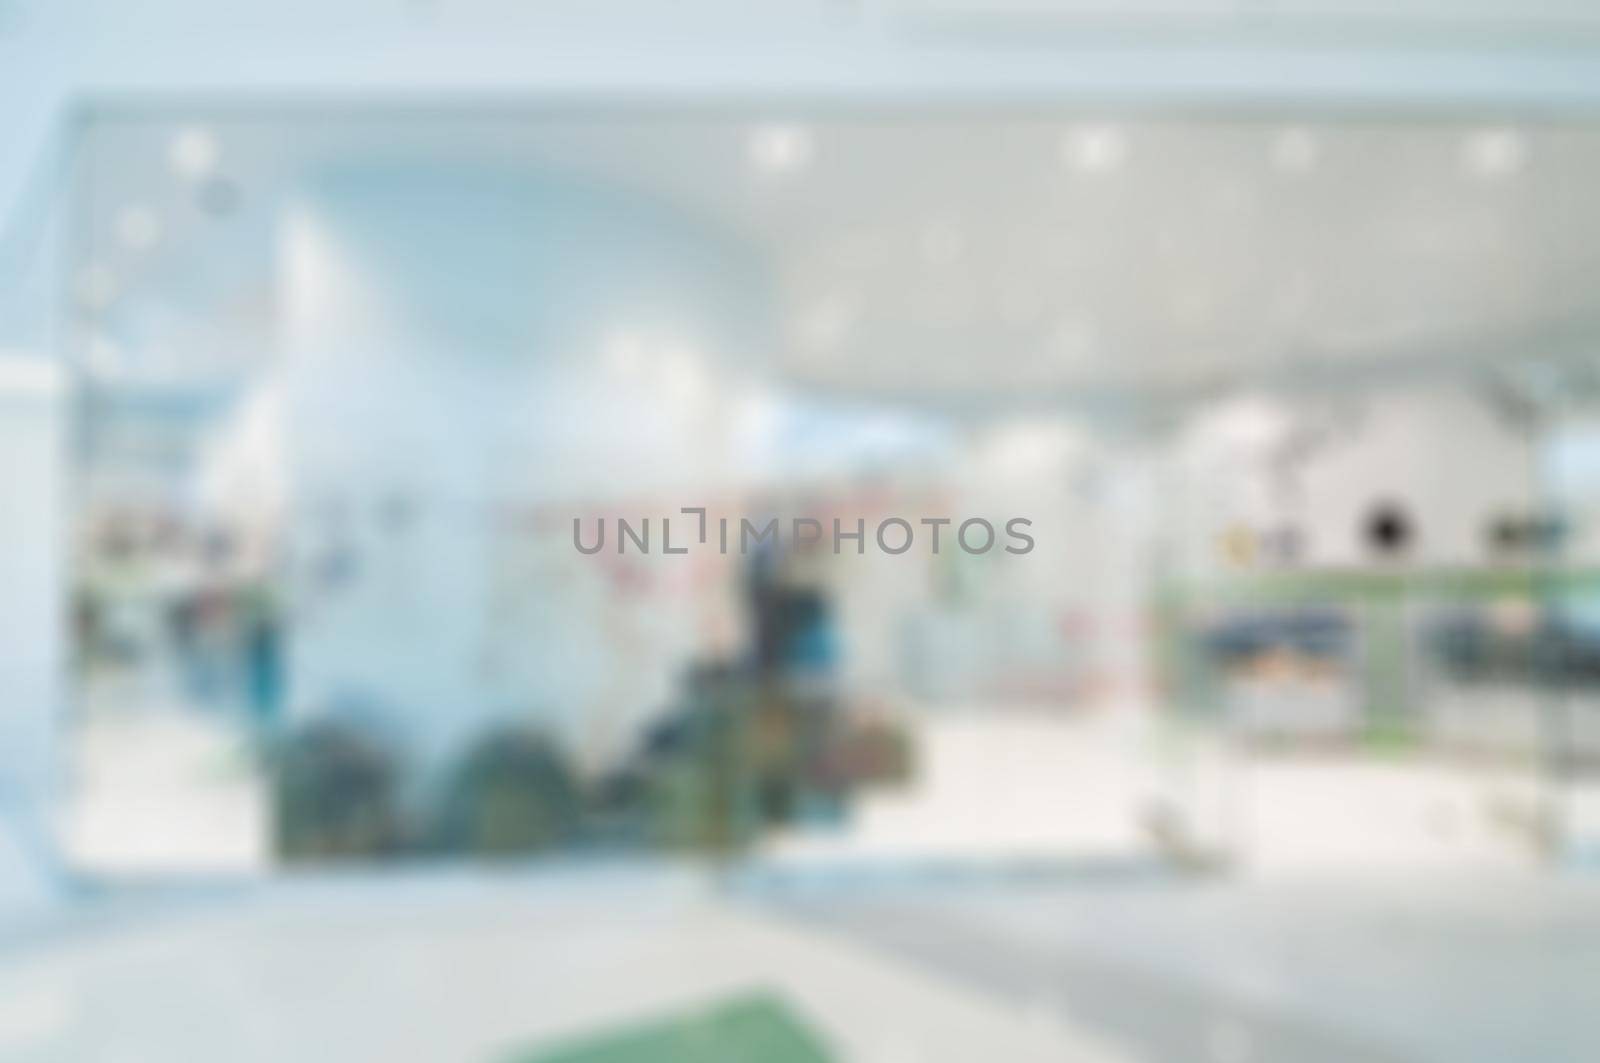 Blur background Shopping mall theme by nikitabuida